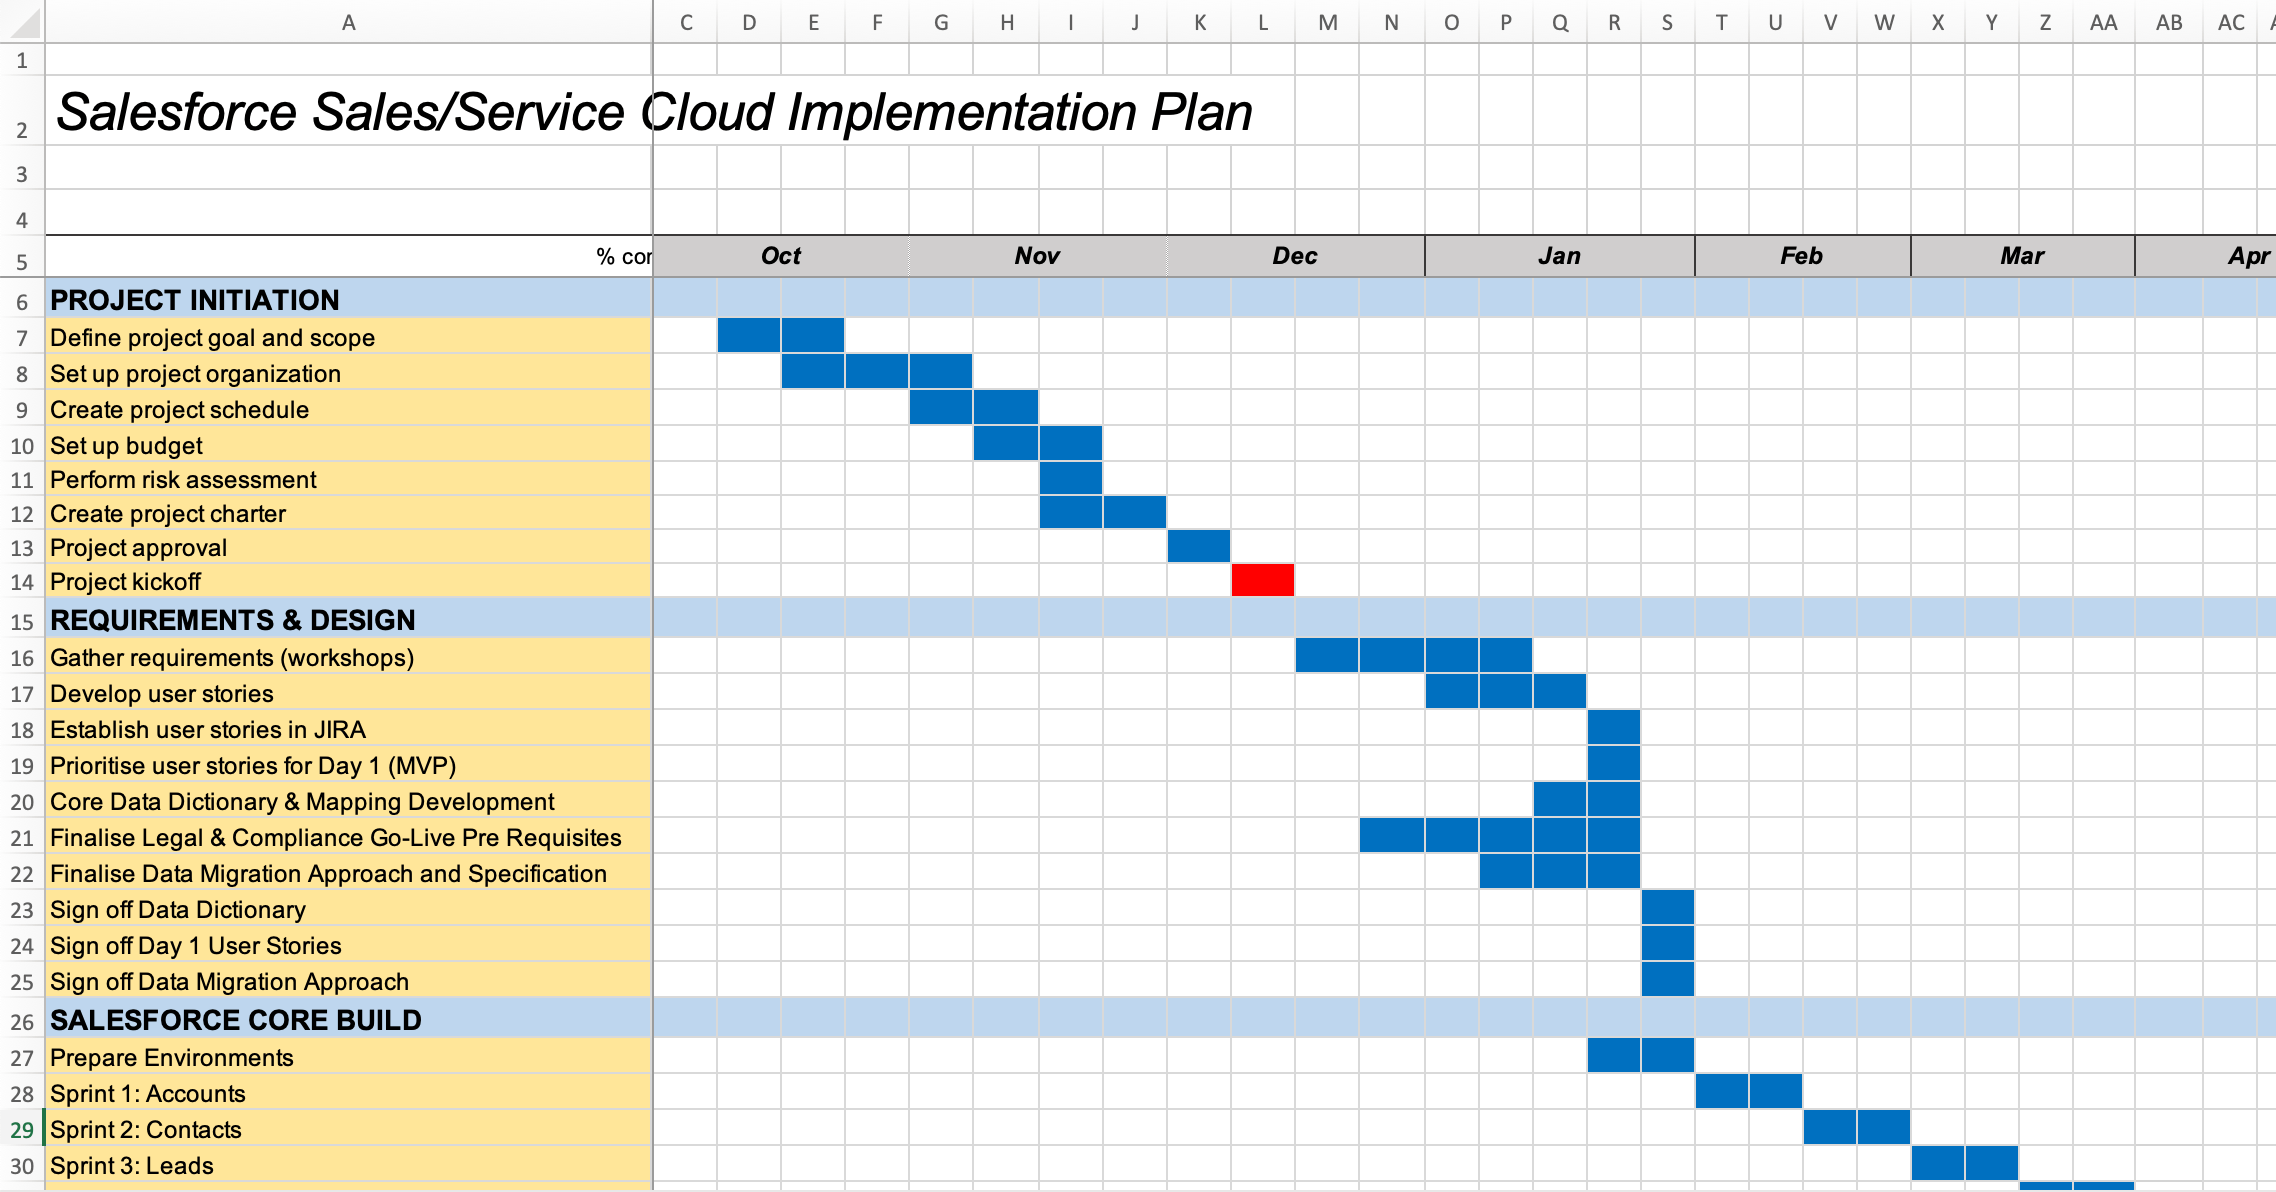 Salesforce implementation schedule in Excel